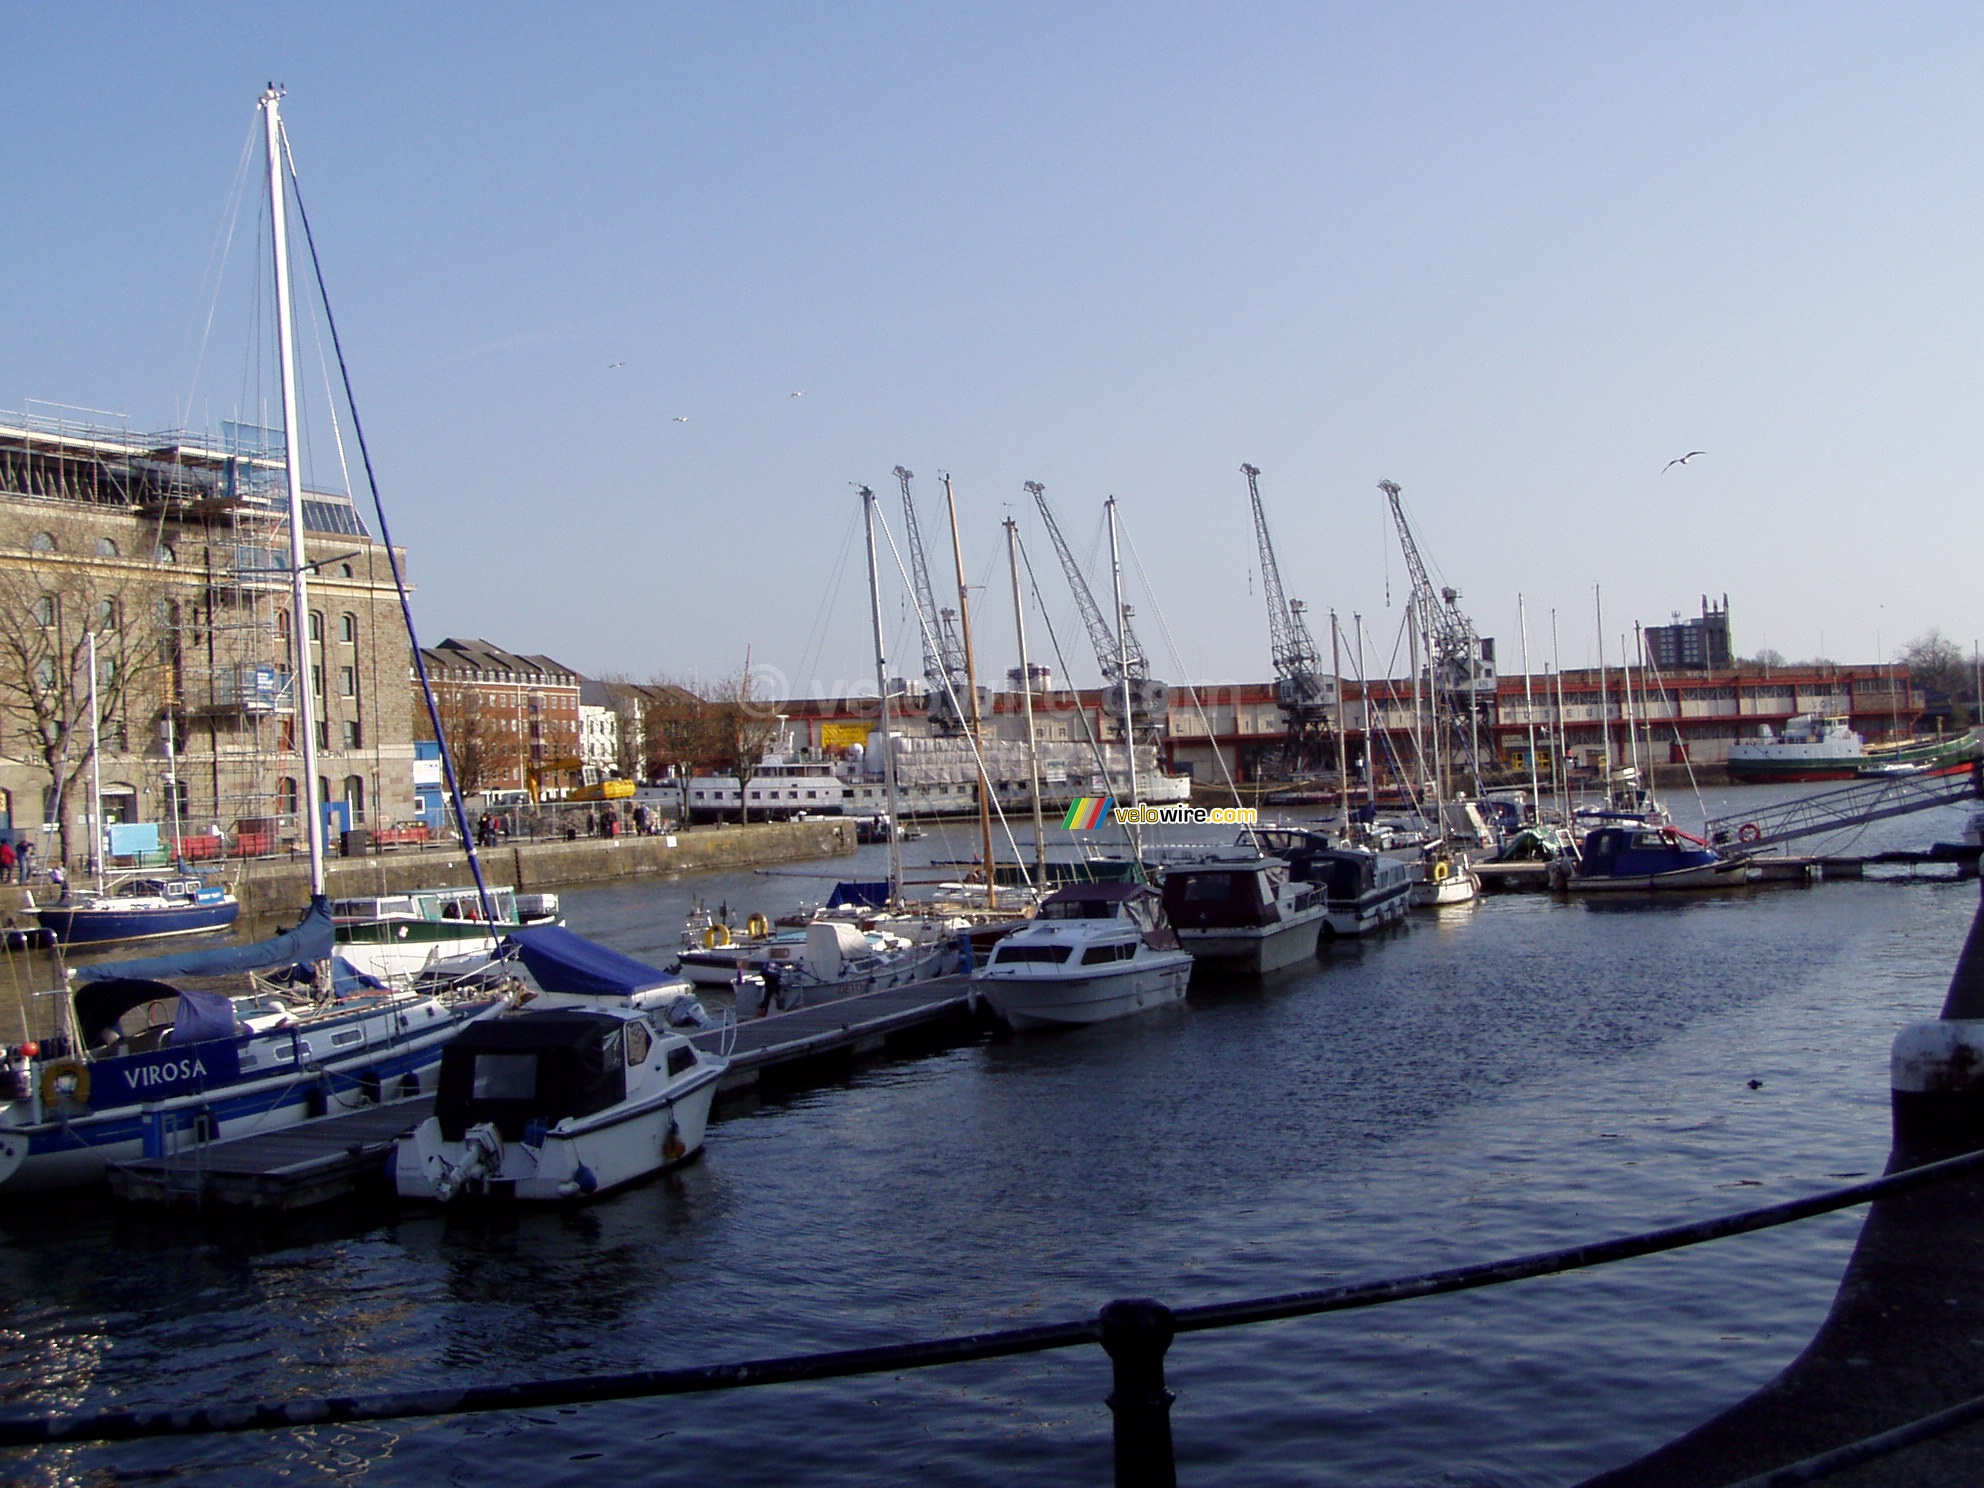 A small harbour in Bristol